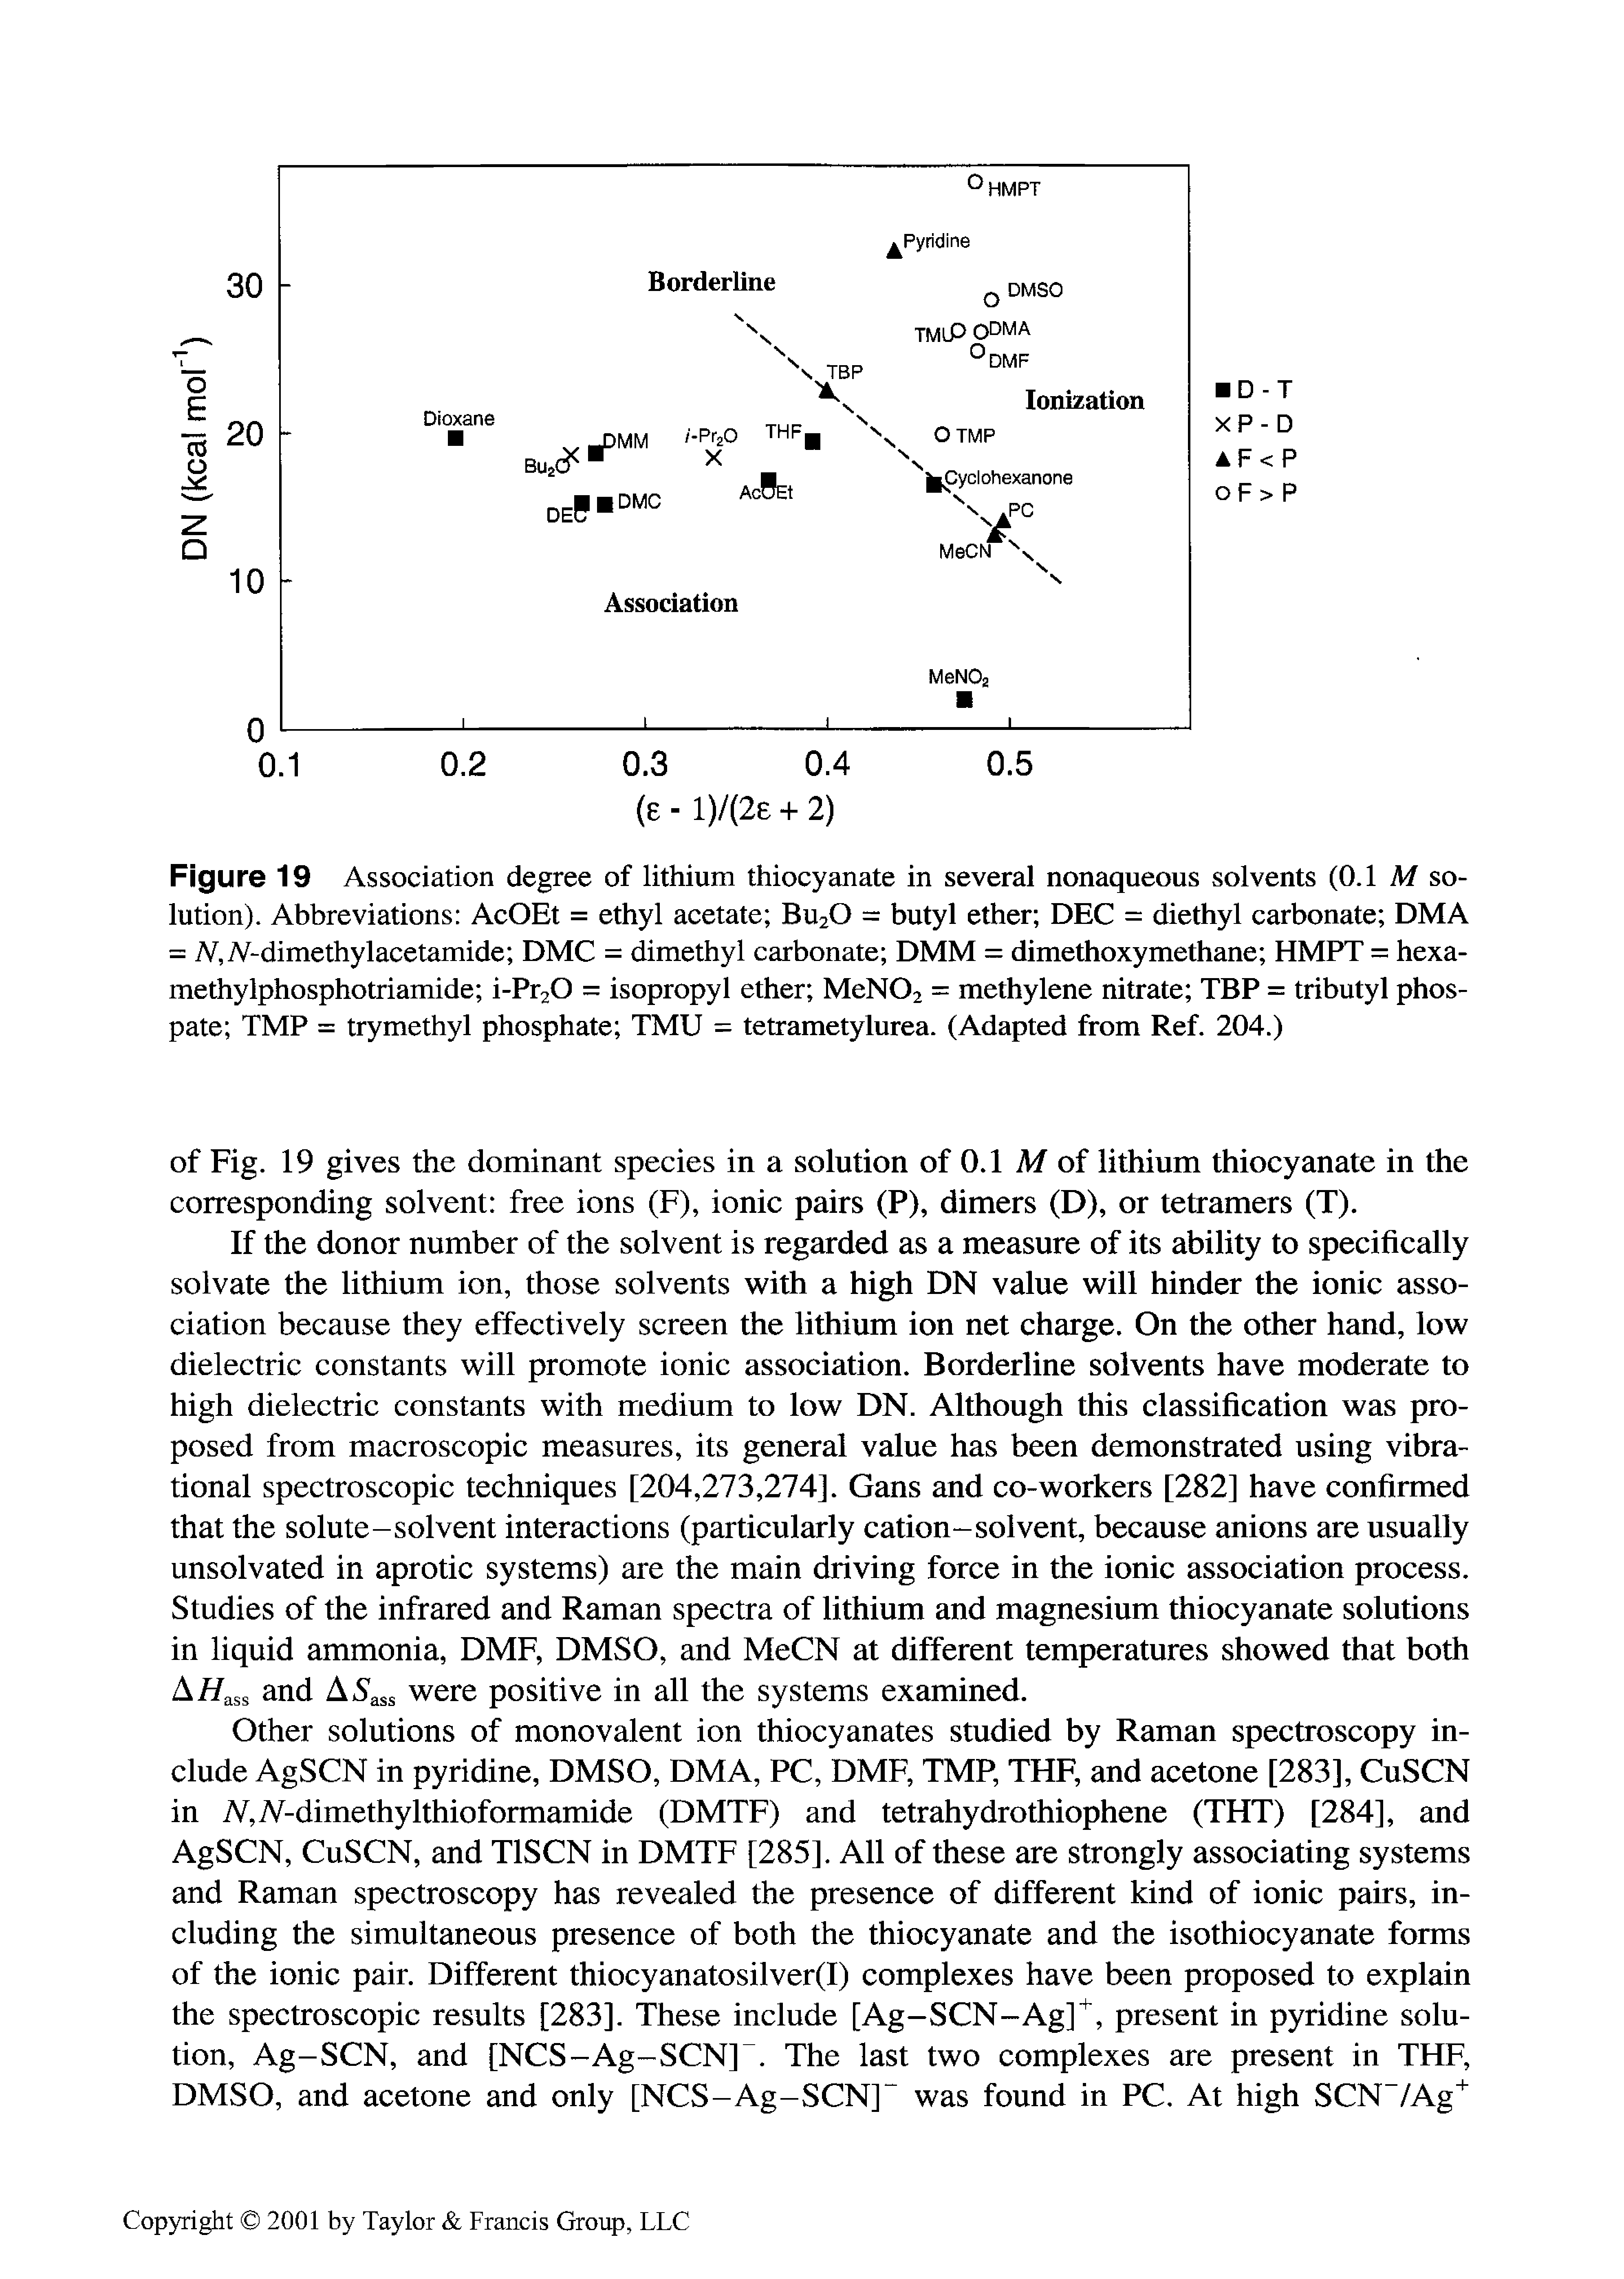 Figure 19 Association degree of lithium thiocyanate in several nonaqueous solvents (0.1 M solution). Abbreviations AcOEt = ethyl acetate BusO = butyl ether DEC = diethyl carbonate DMA = A, A-dimethylacetamide DMC = dimethyl carbonate DMM = dimethoxymethane HMPT = hexa-methylphosphotriamide i-Pr20 = isopropyl ether MeN02 = methylene nitrate TBP = tributyl phos-pate TMP = trymethyl phosphate TMU = tetrametylurea. (Adapted from Ref. 204.)...